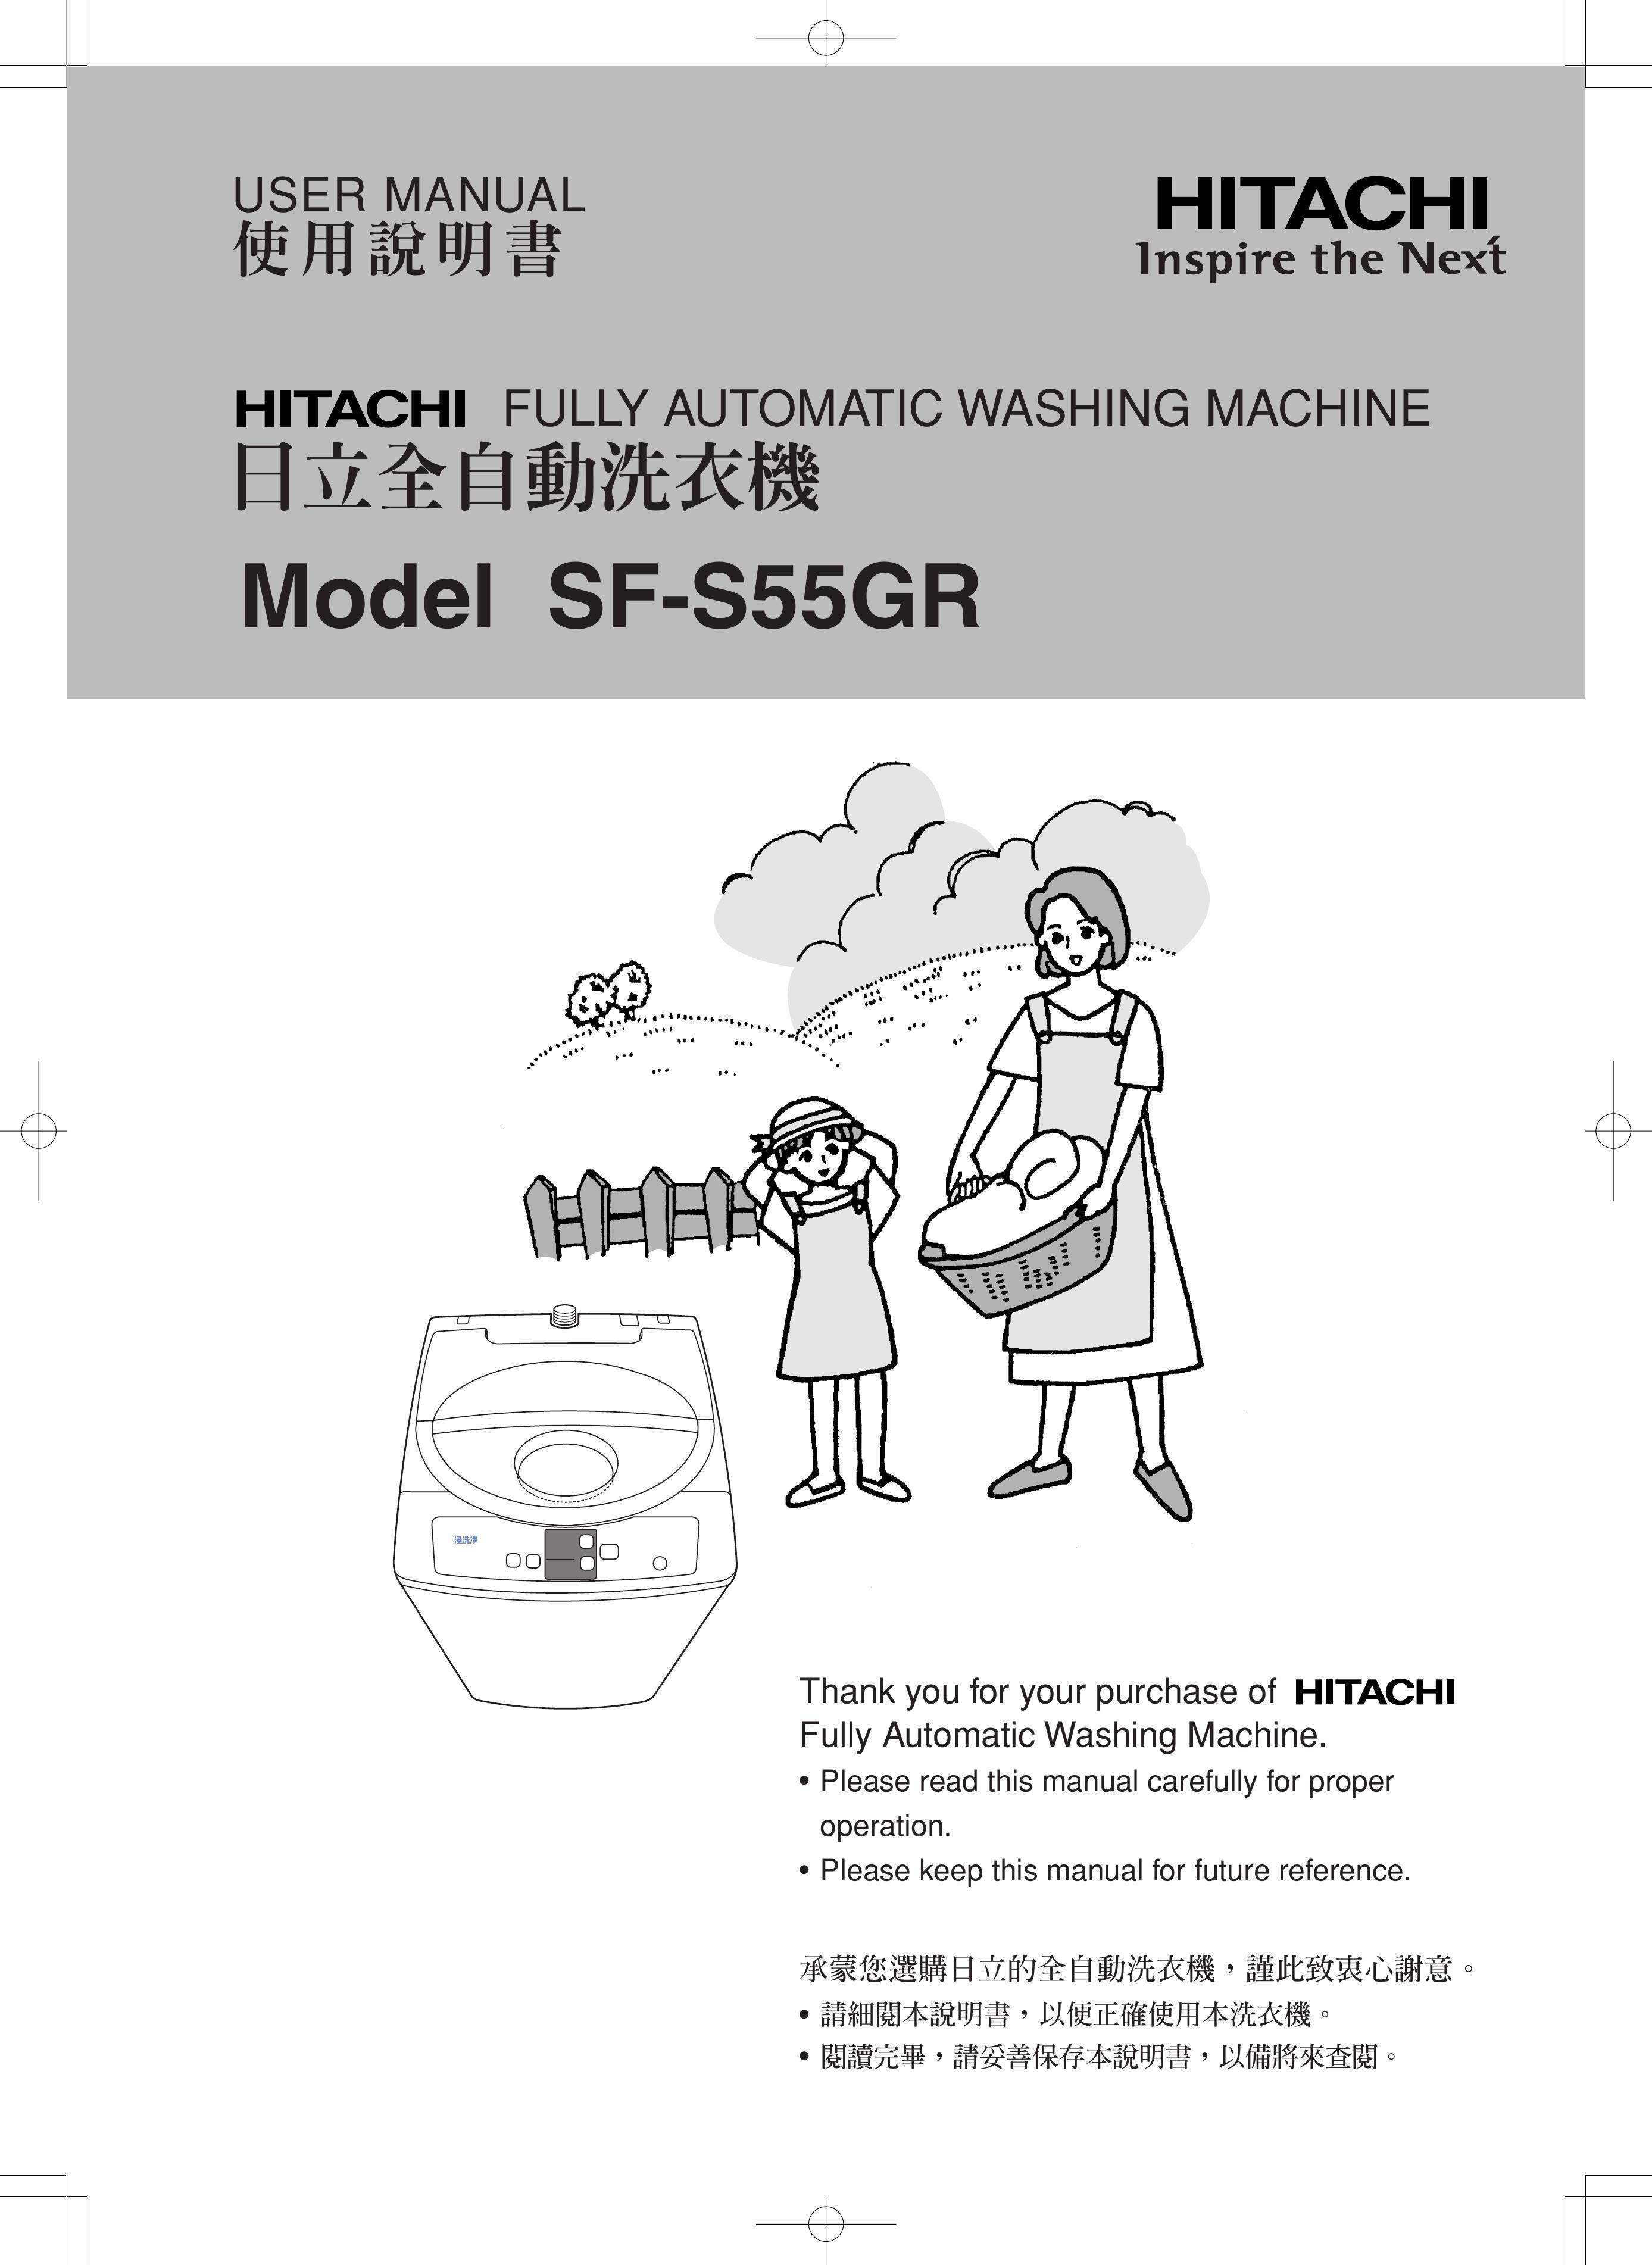 Hitachi SF-S55GR Washer User Manual